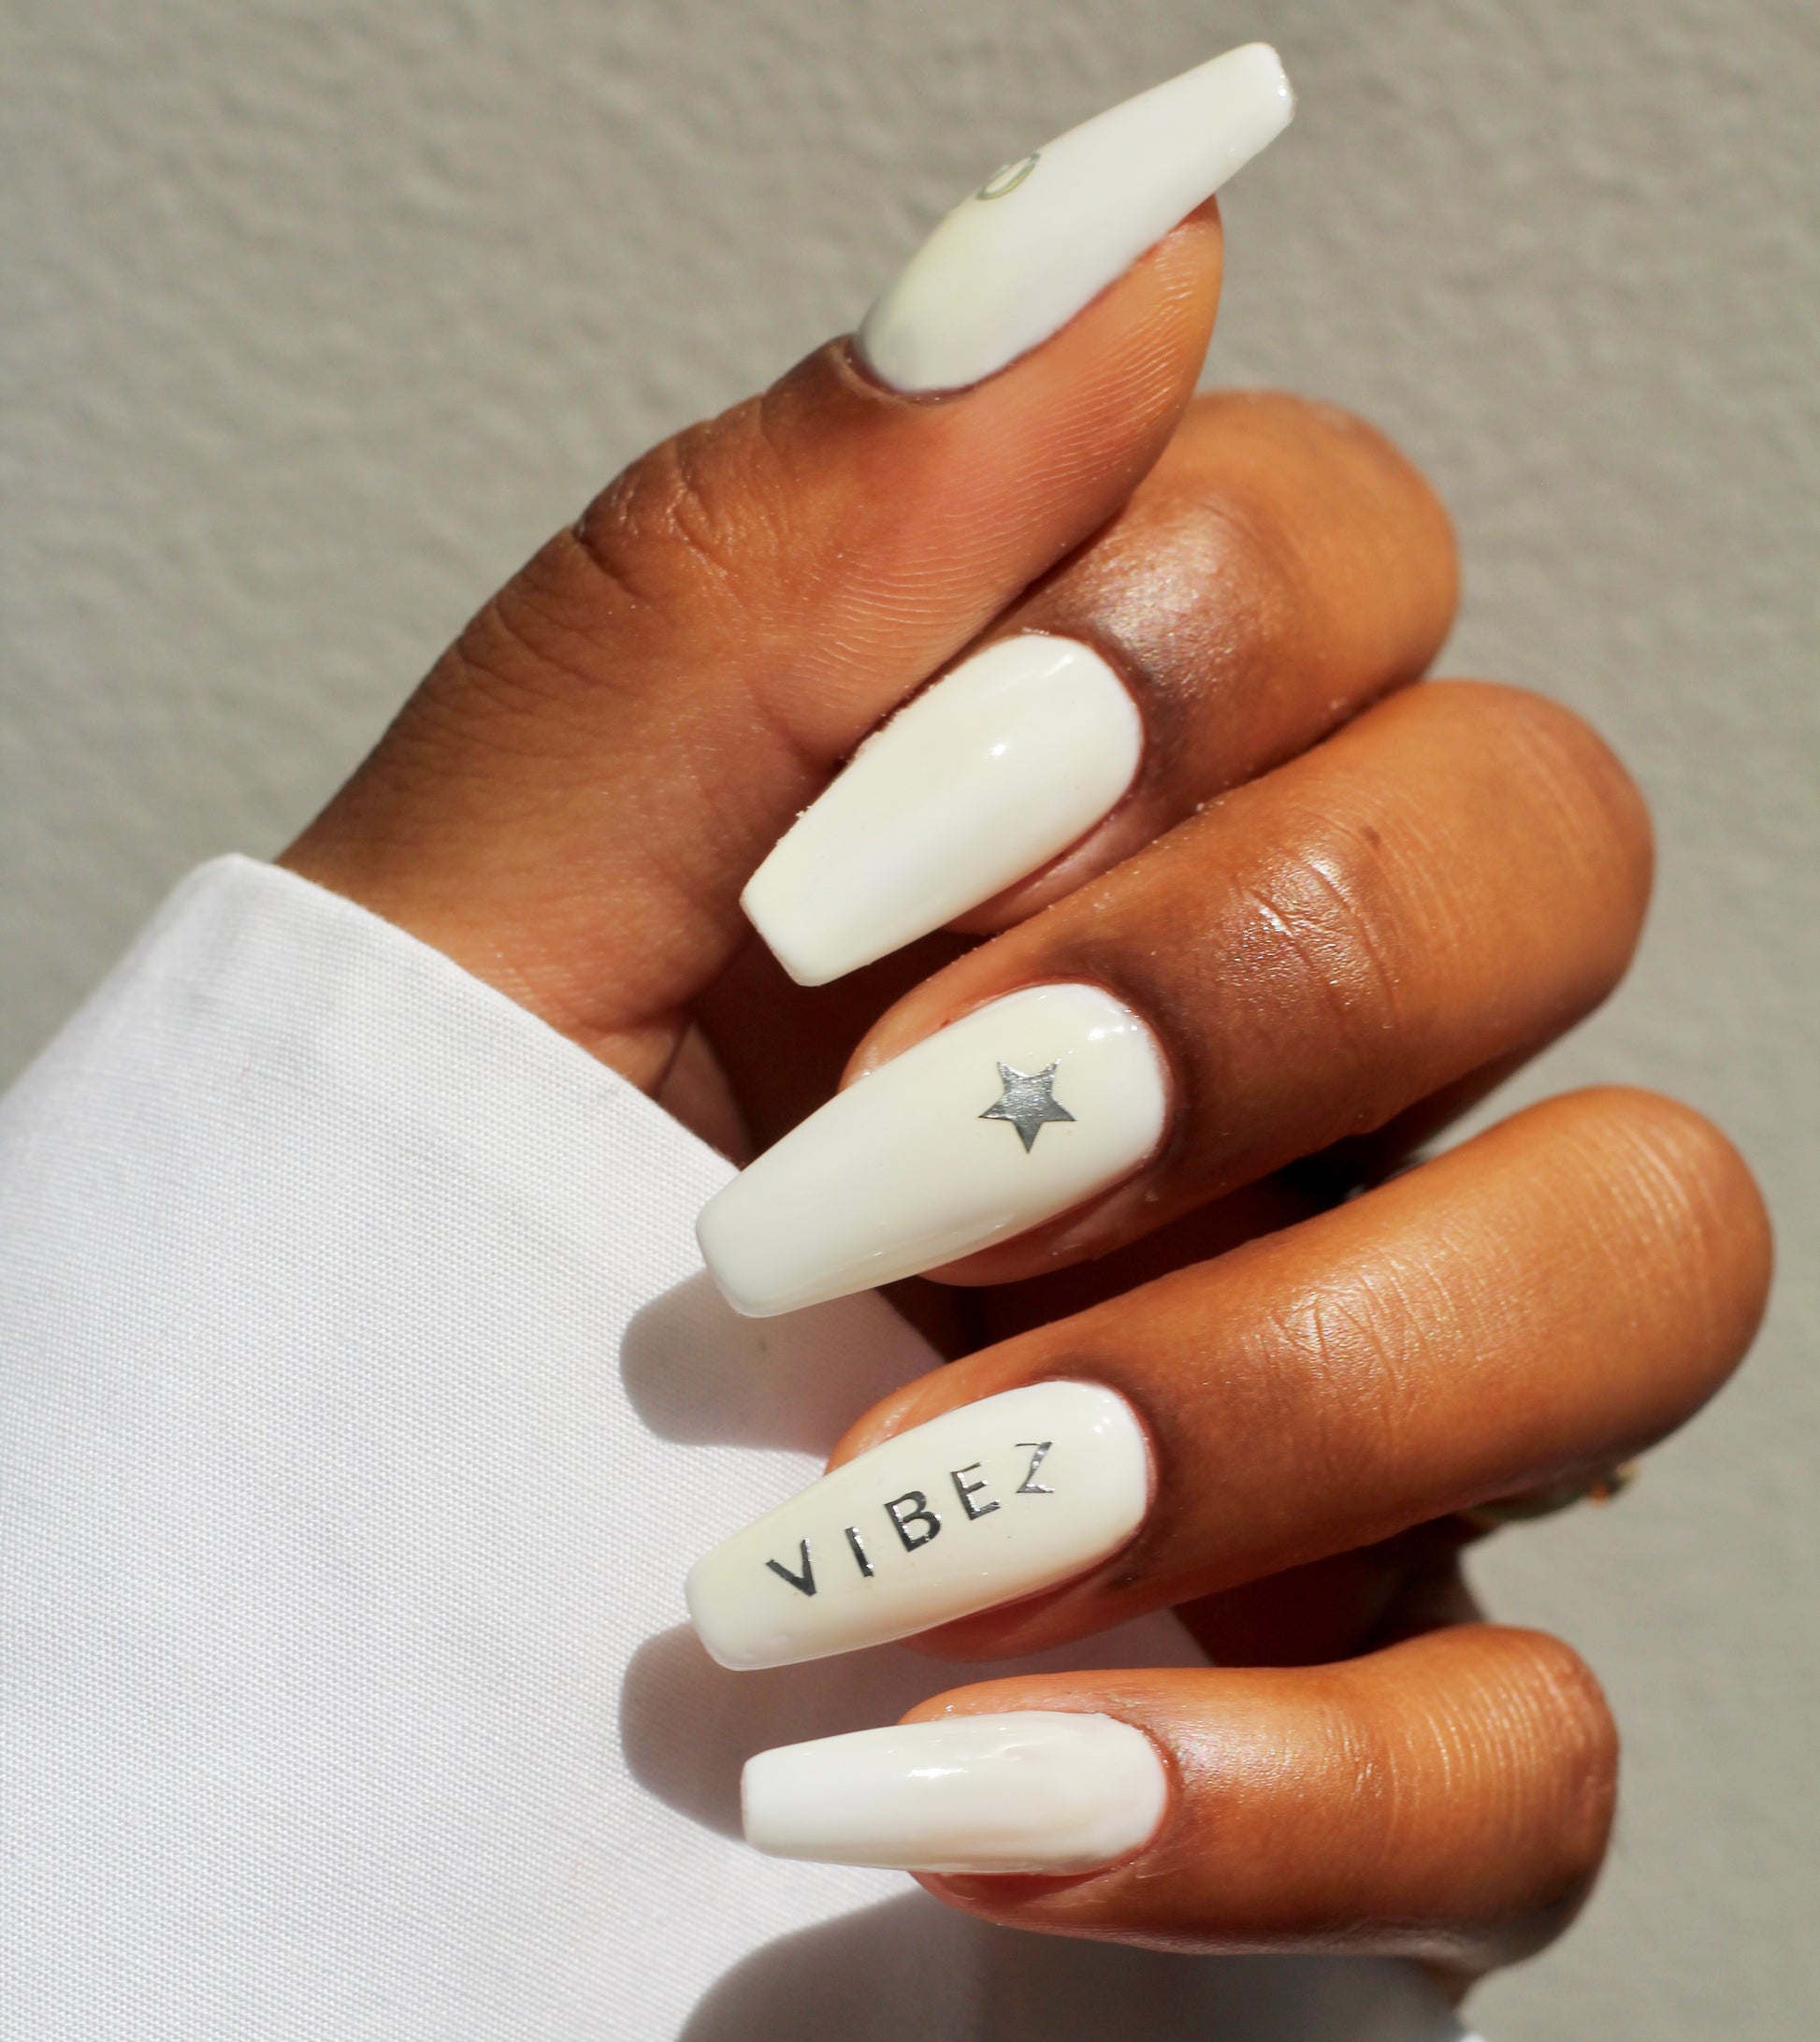 ABCS on cream nails, VIBEZ